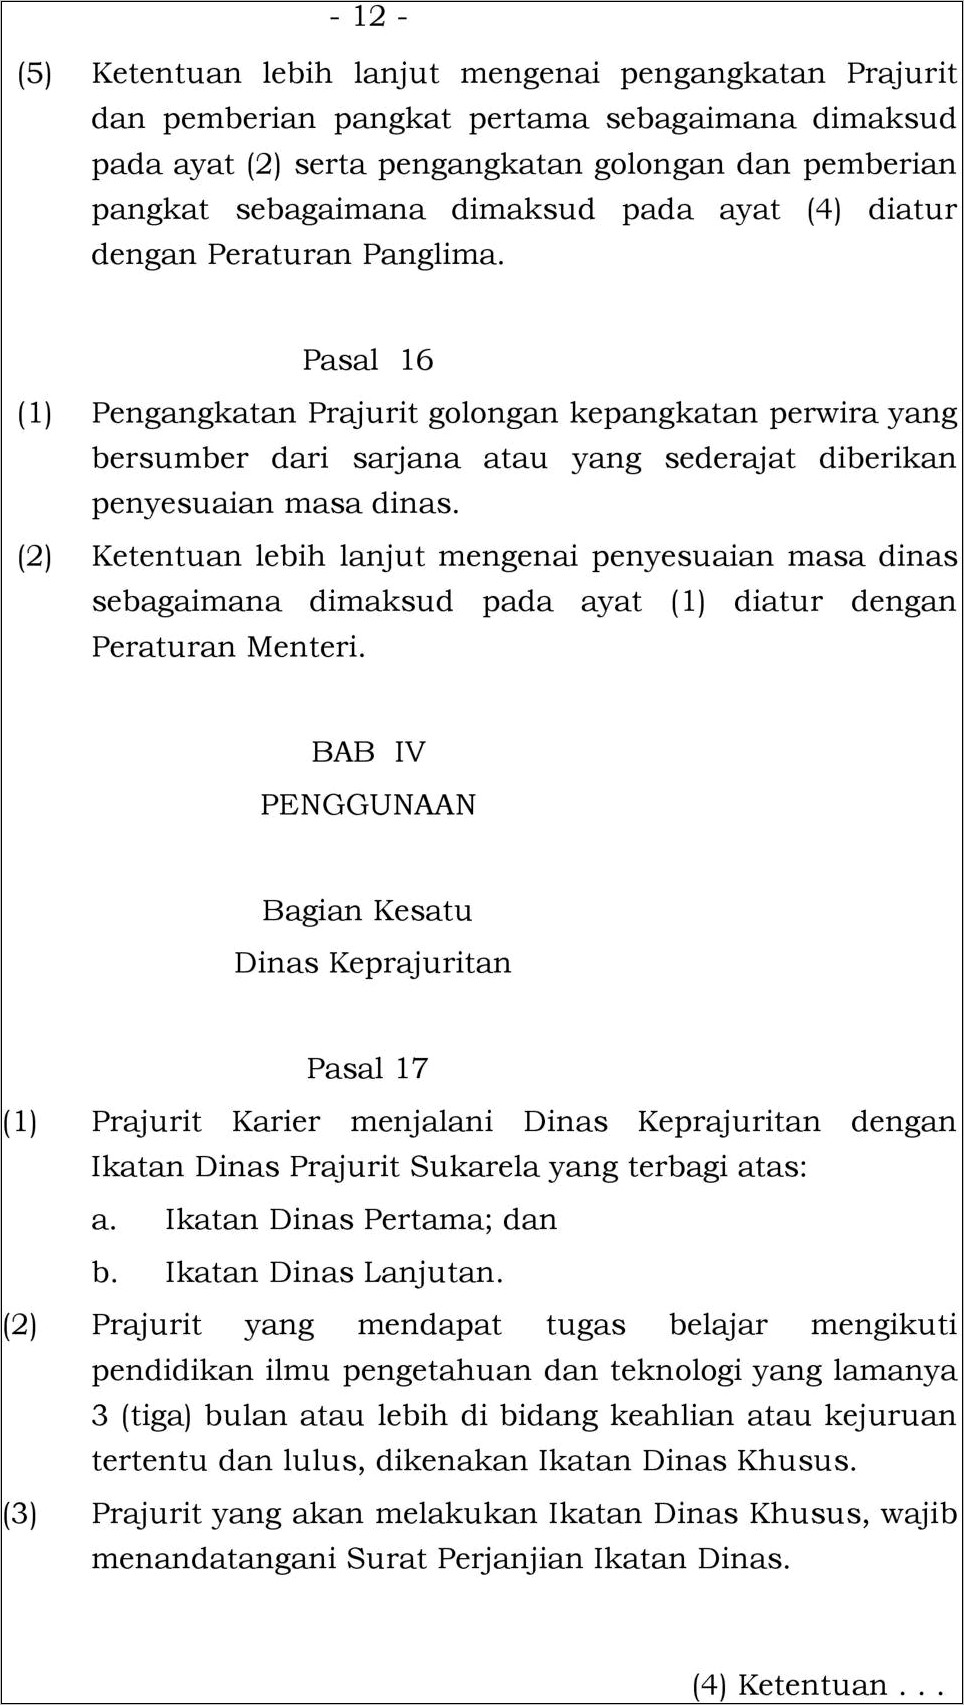 Contoh Surat Perjanjian Ikatan Dinas Pertama Anggota Polri 2015